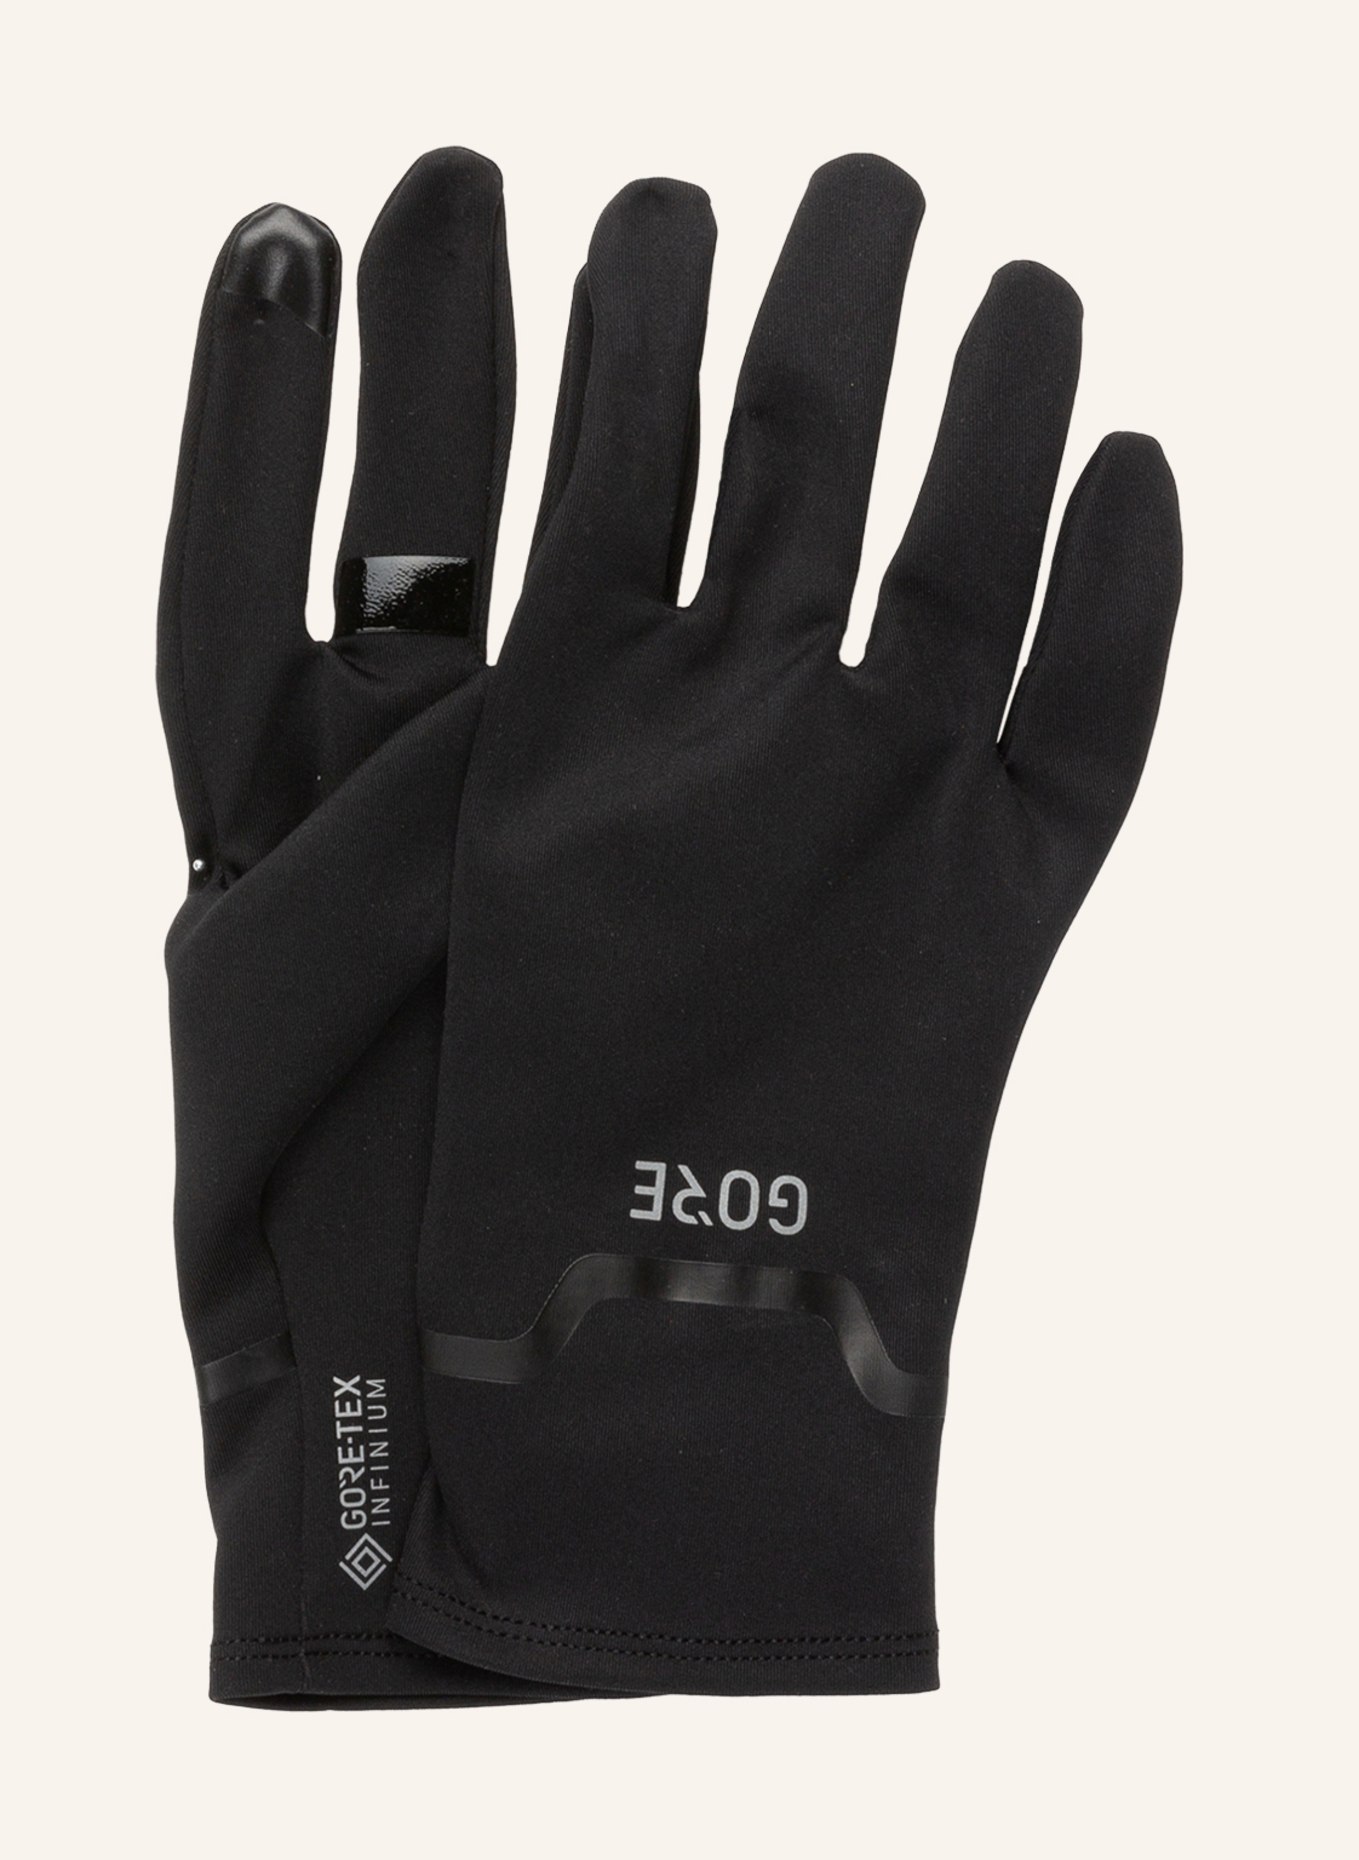 GORE RUNNING WEAR Multisport-Handschuhe GORE-TEX INFINIUM™ in schwarz | Handschuhe